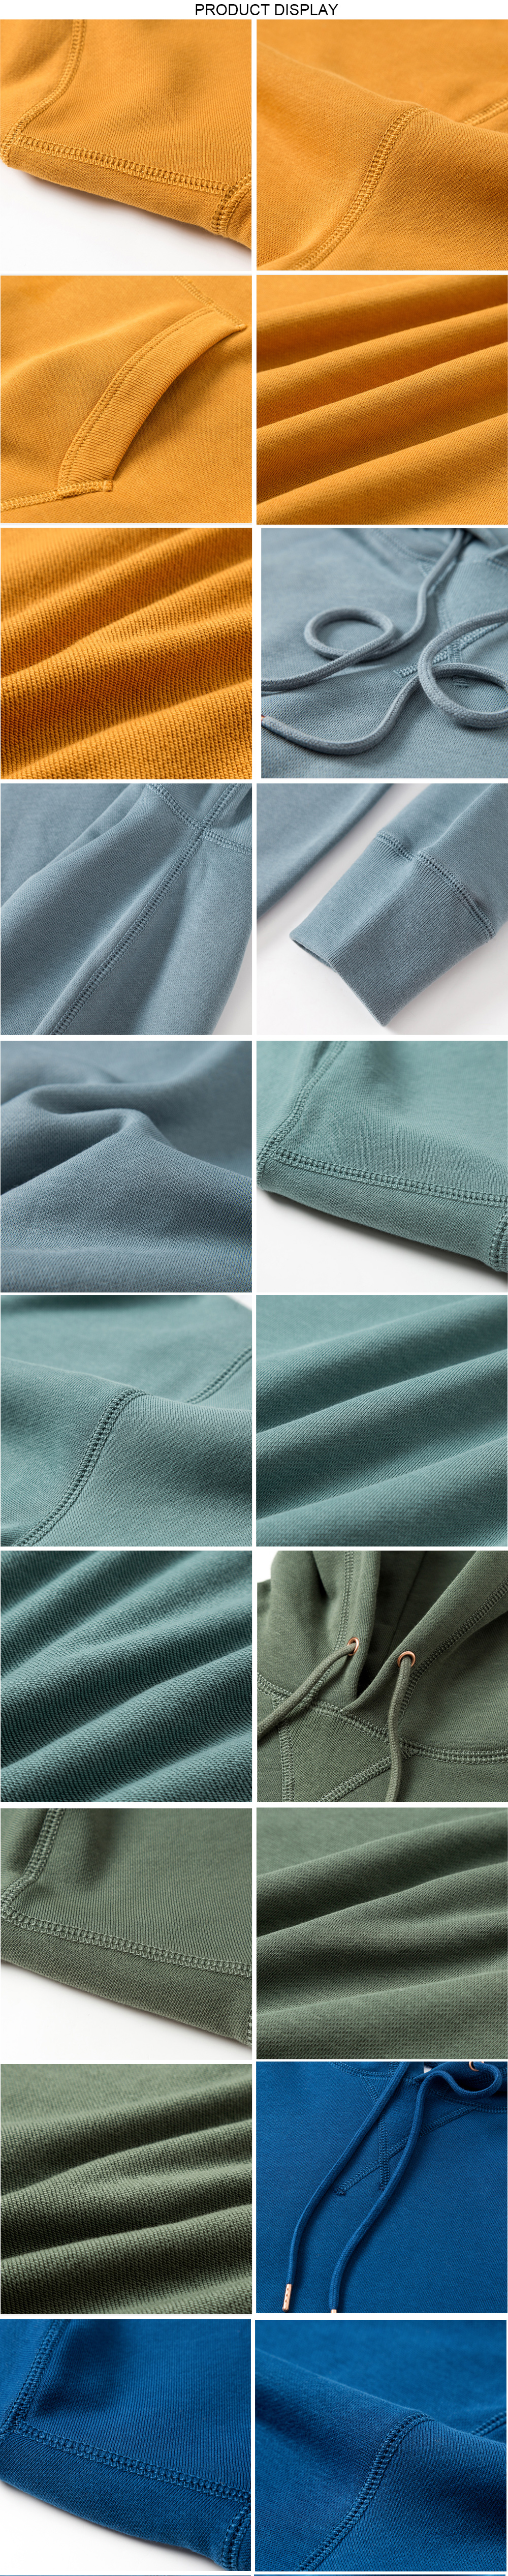 High quality custom logo print hoodie 100% cotton crew collar unisex sport sweatshirt with pocket